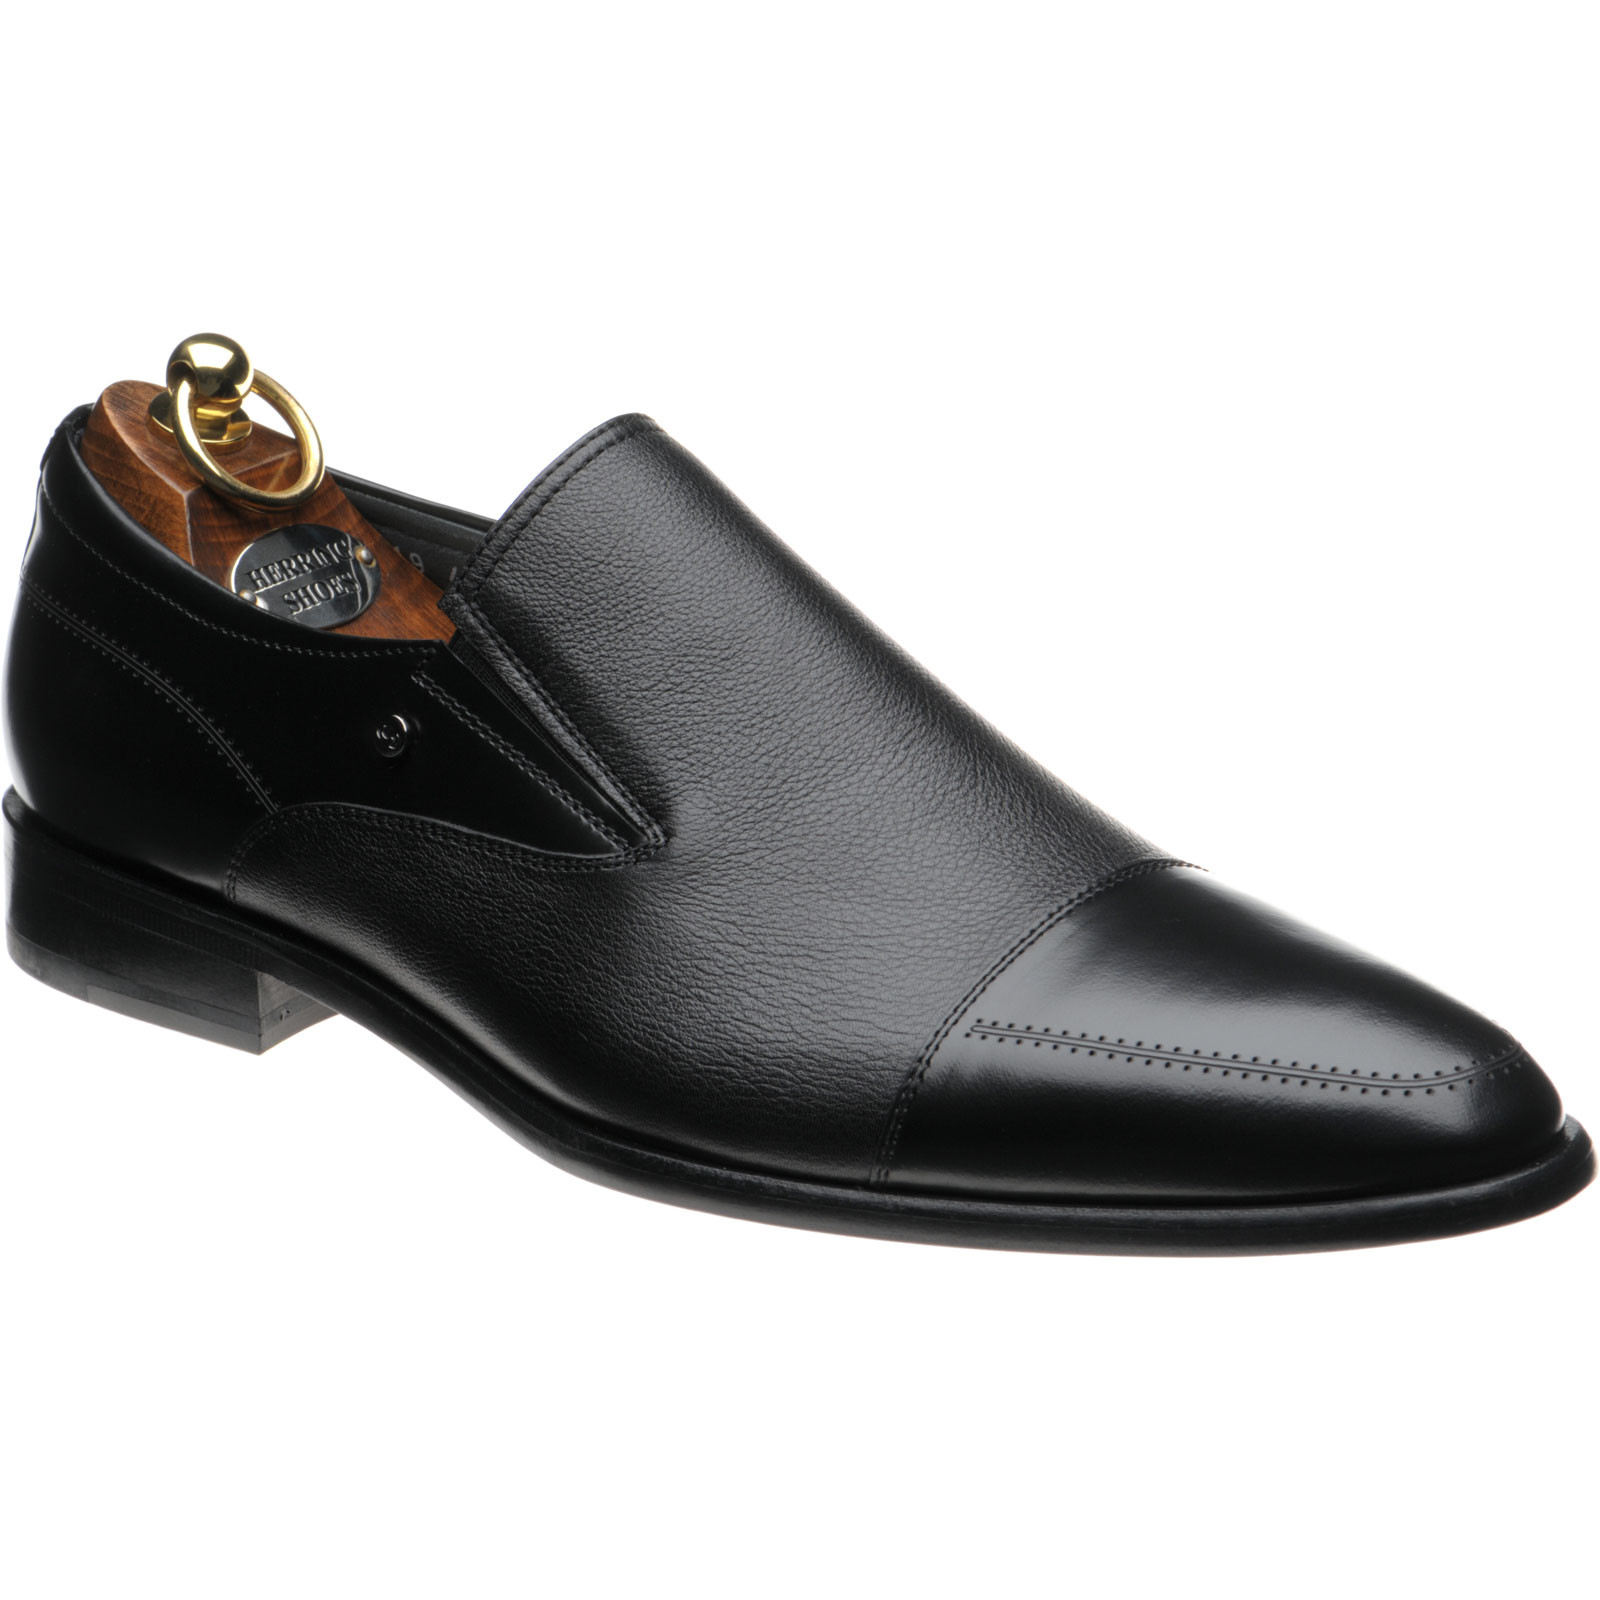 Herring shoes | Herring Graduate | Frederick in Black Calf and Polished ...